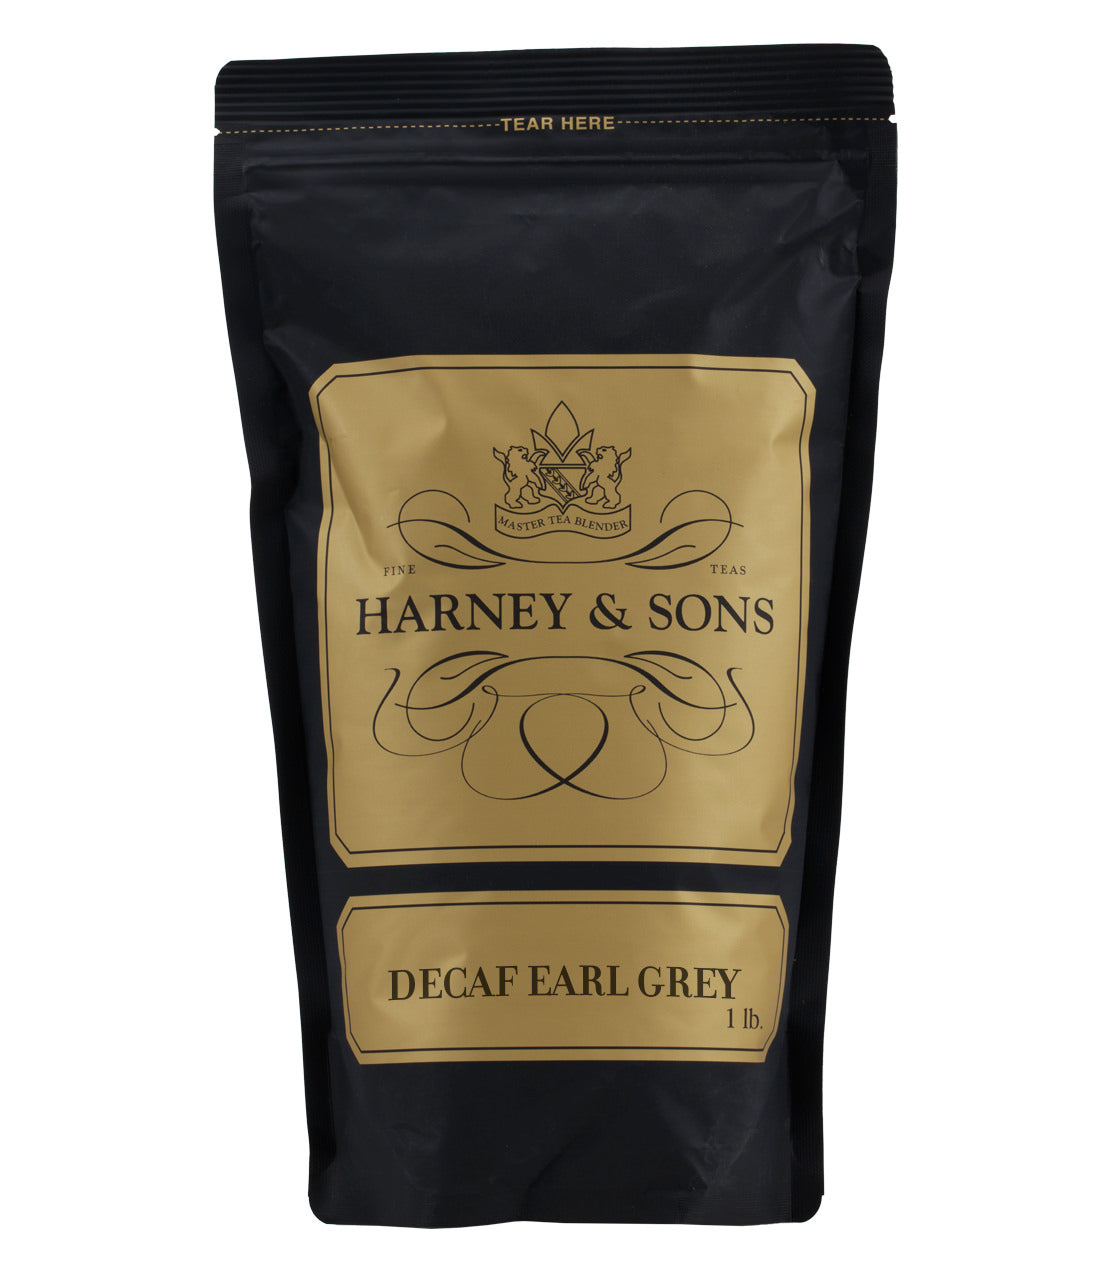 Decaf Earl Grey - Loose 1 lb. Bag - Harney & Sons Fine Teas